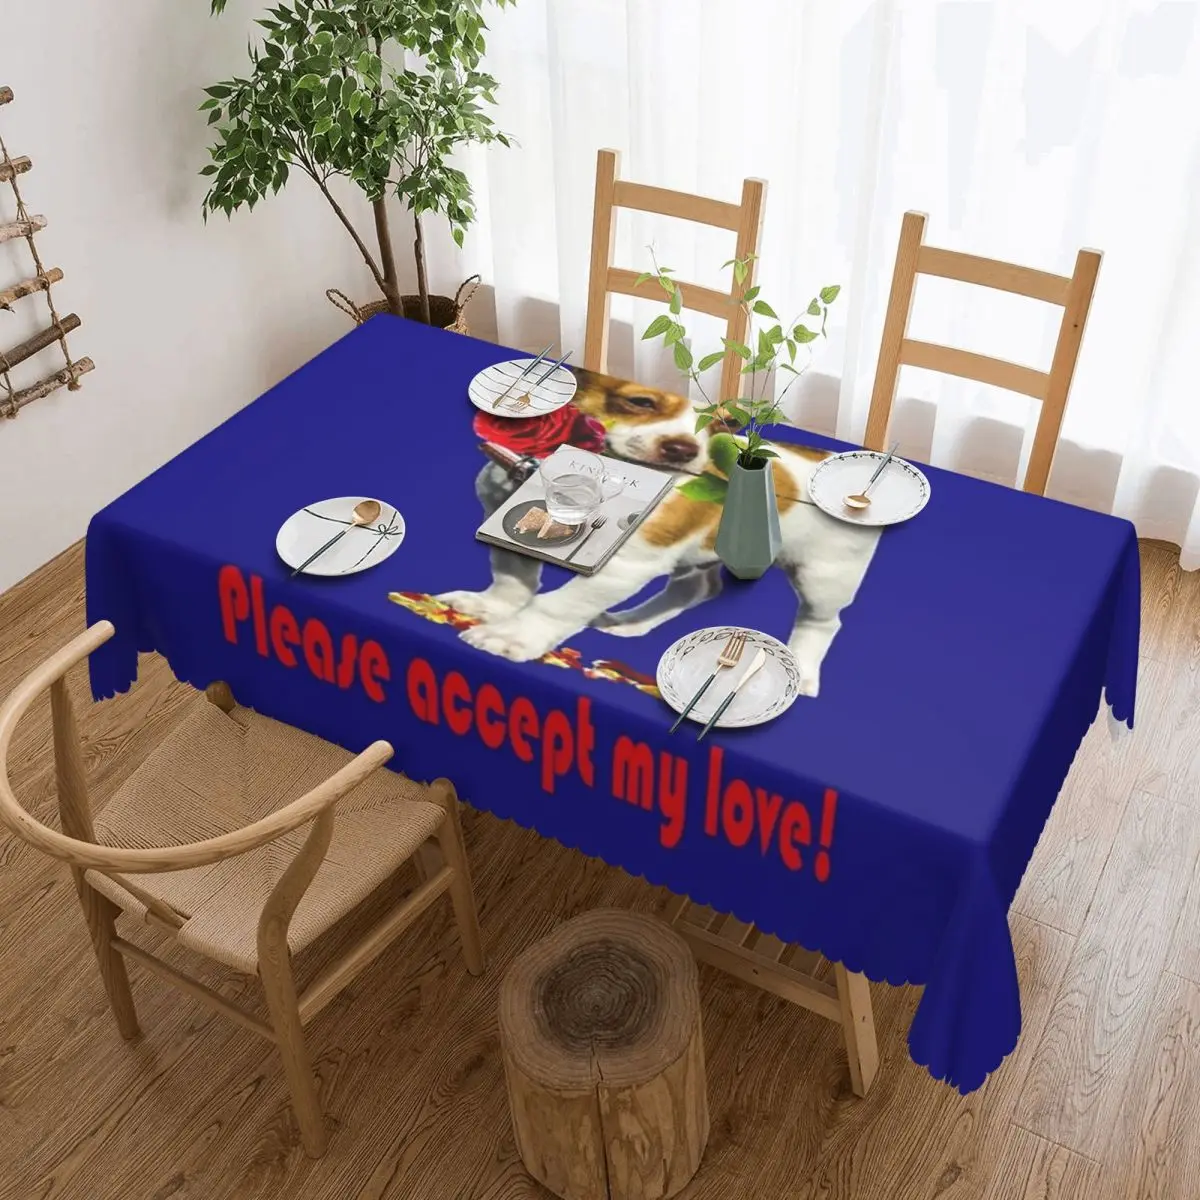 

Please Accept My Love Tablecloth 54x72in Waterproof Decorative Border Indoor/Outdoor